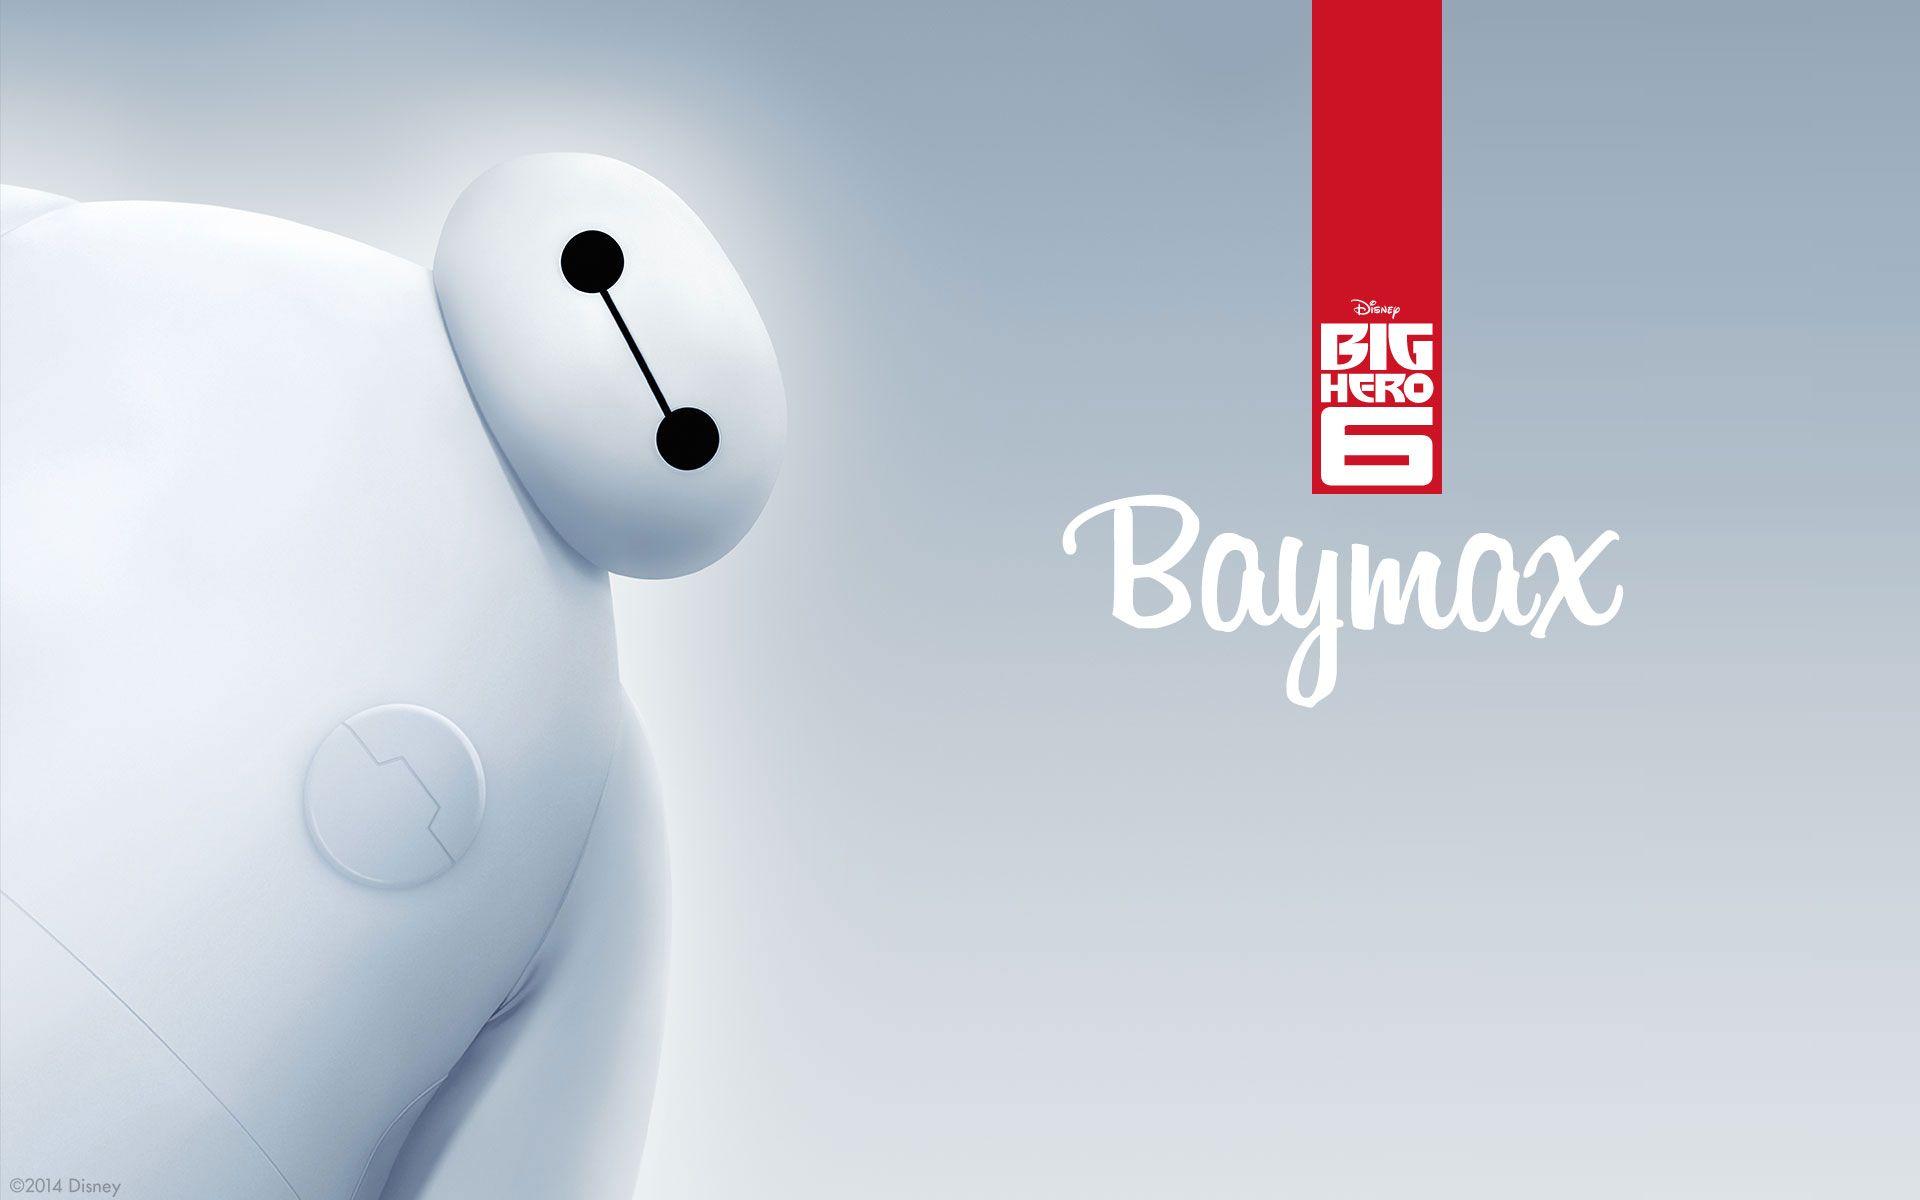 image about Baymax Big Hero 6. Baymax, Big